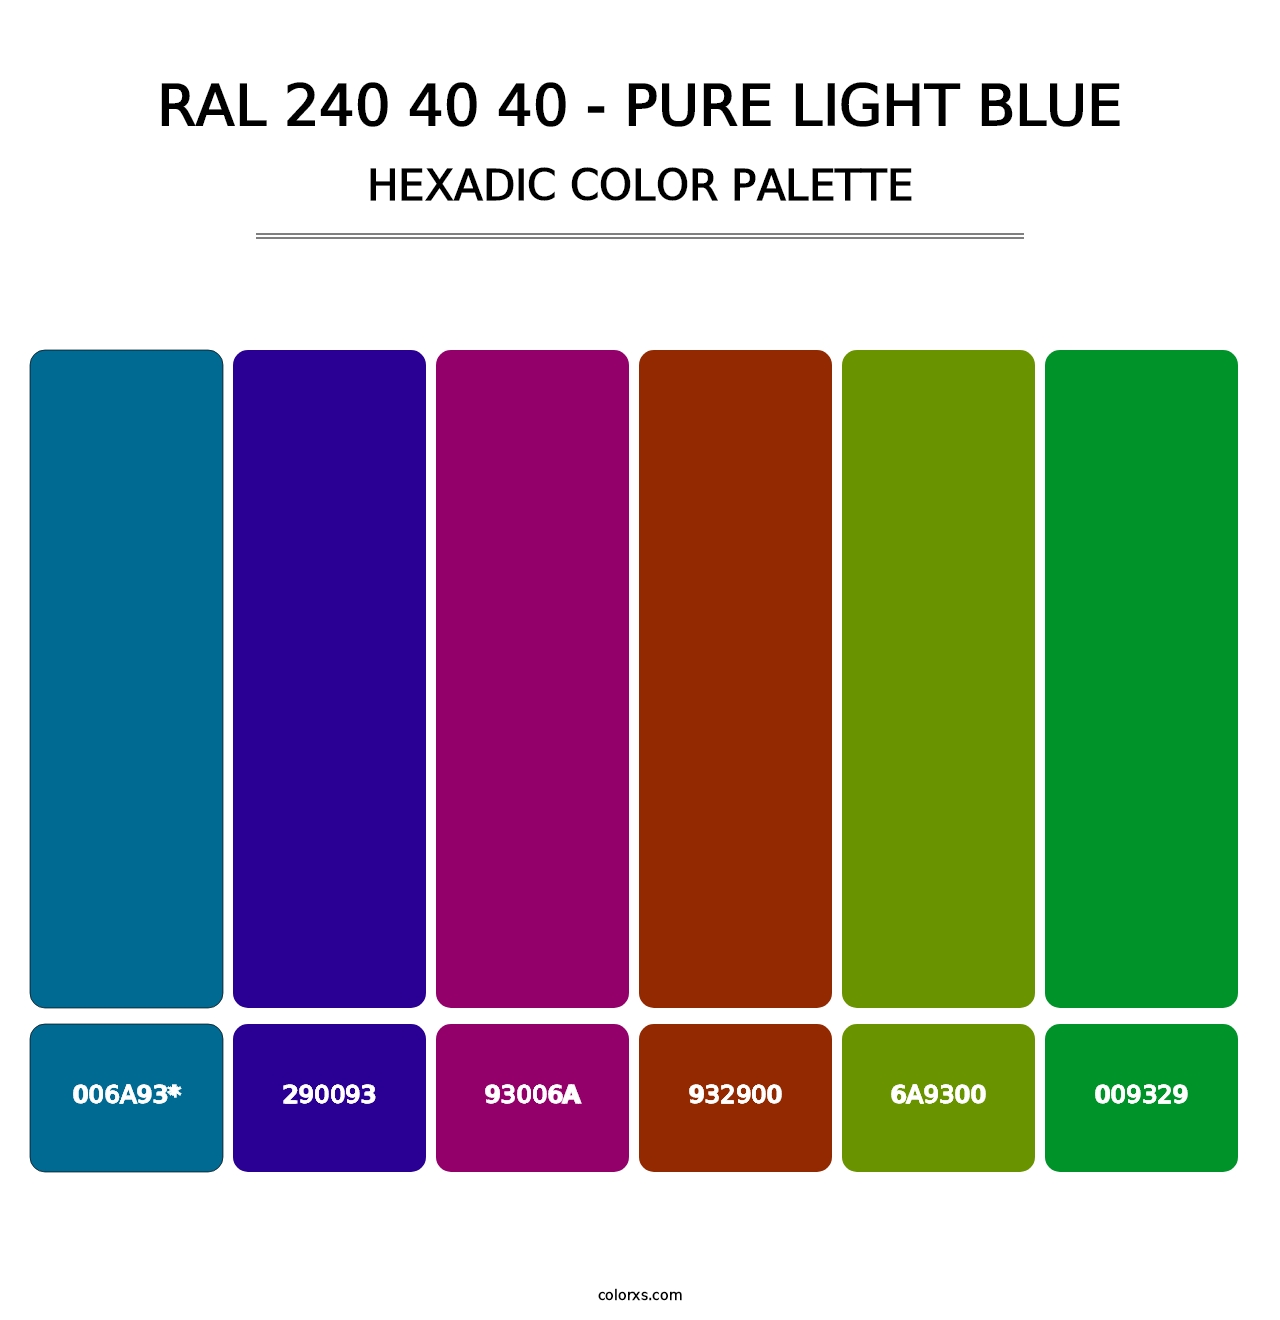 RAL 240 40 40 - Pure Light Blue - Hexadic Color Palette